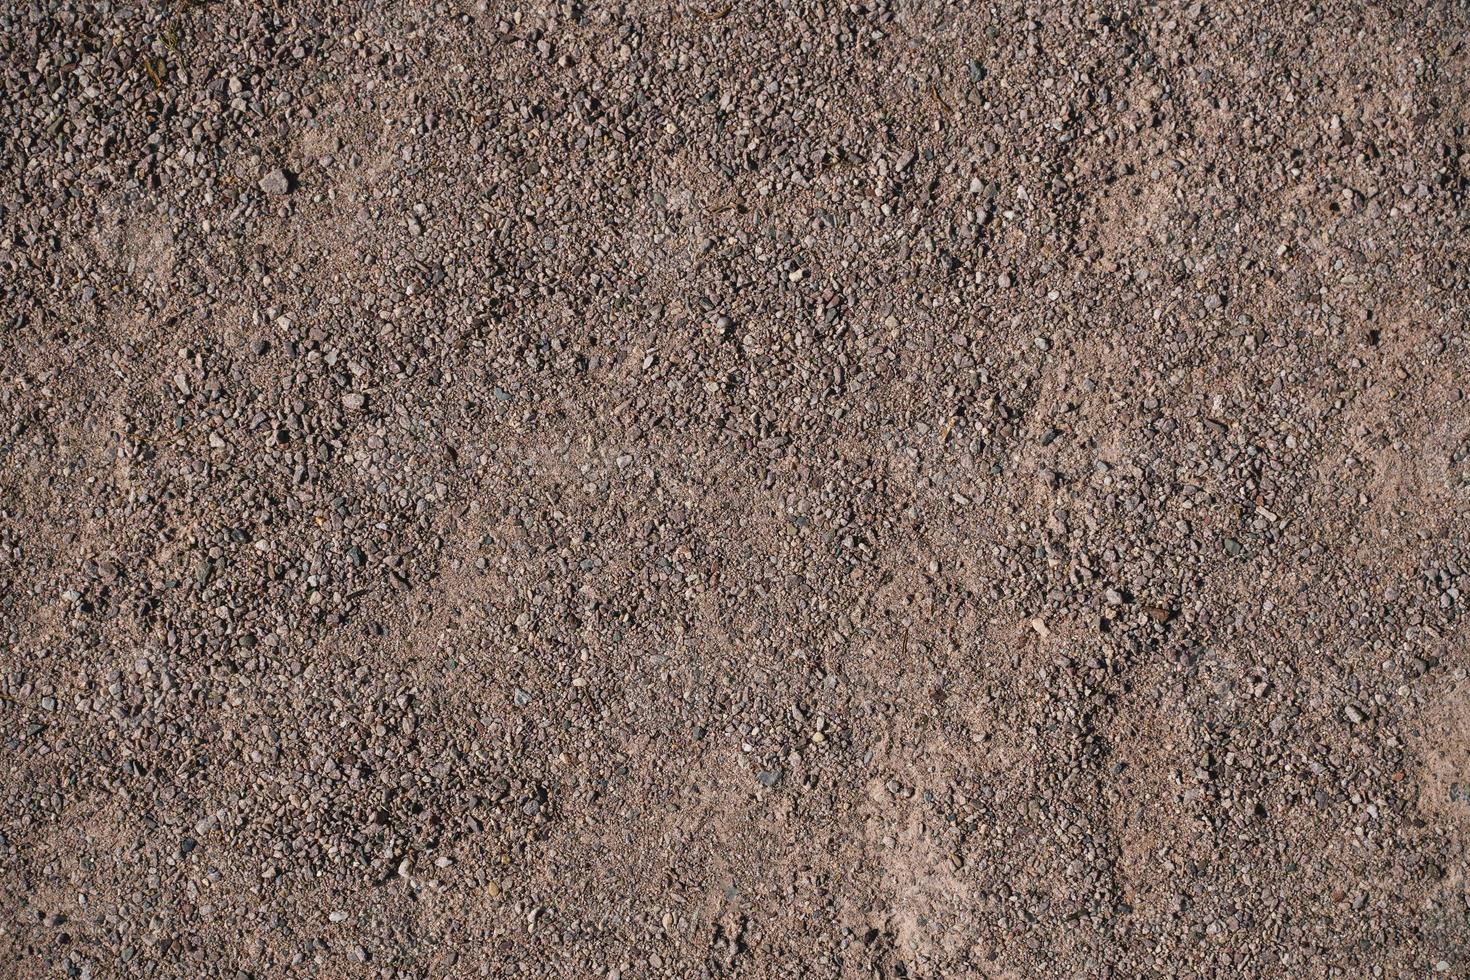 Brown gravel background photo